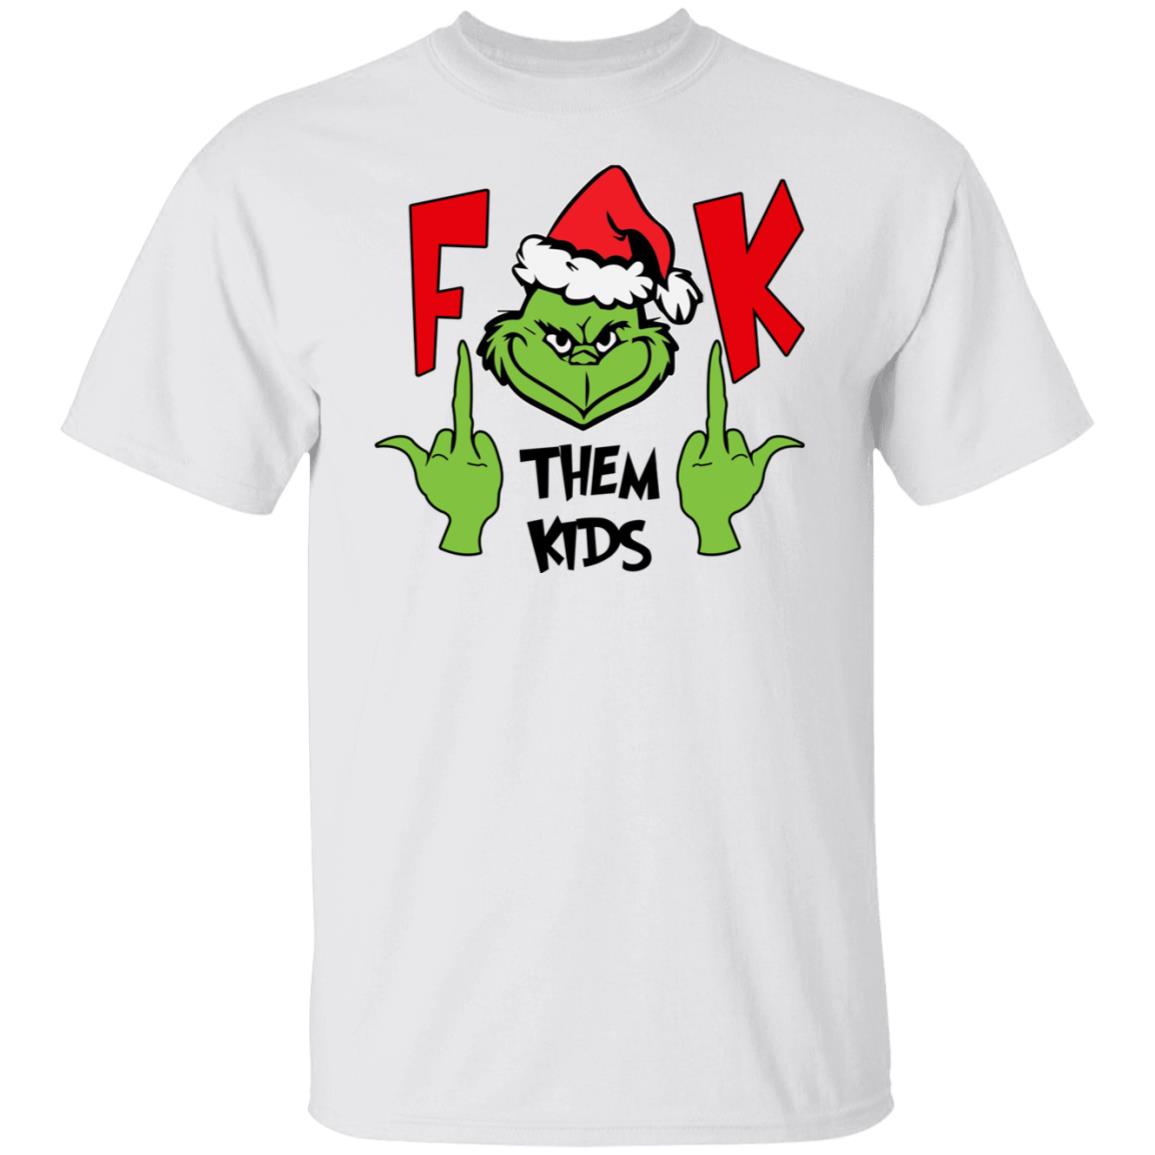 Grinch Fuck Them Kids shirt